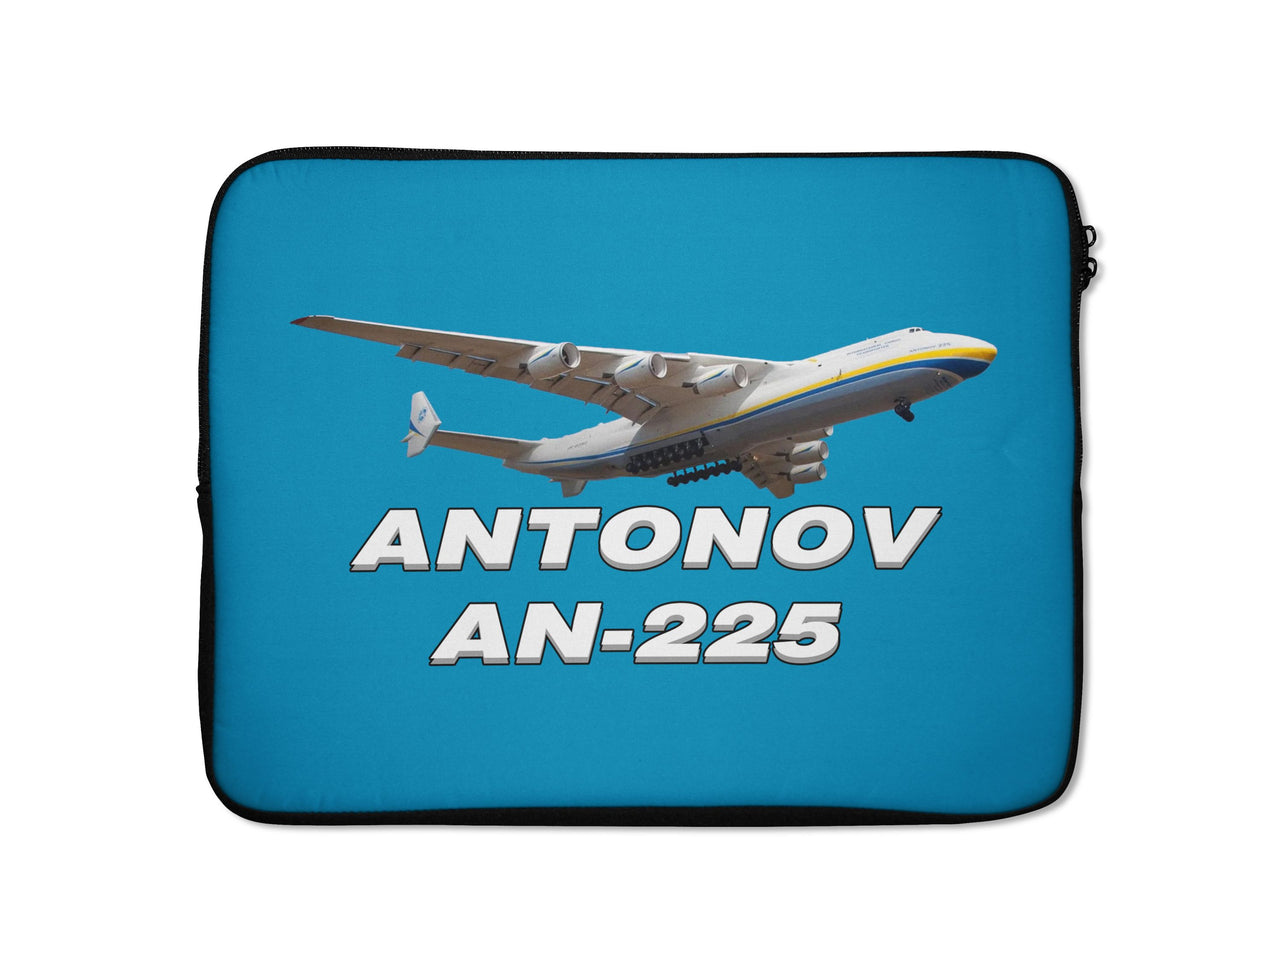 Antonov AN-225 (15) Designed Laptop & Tablet Cases